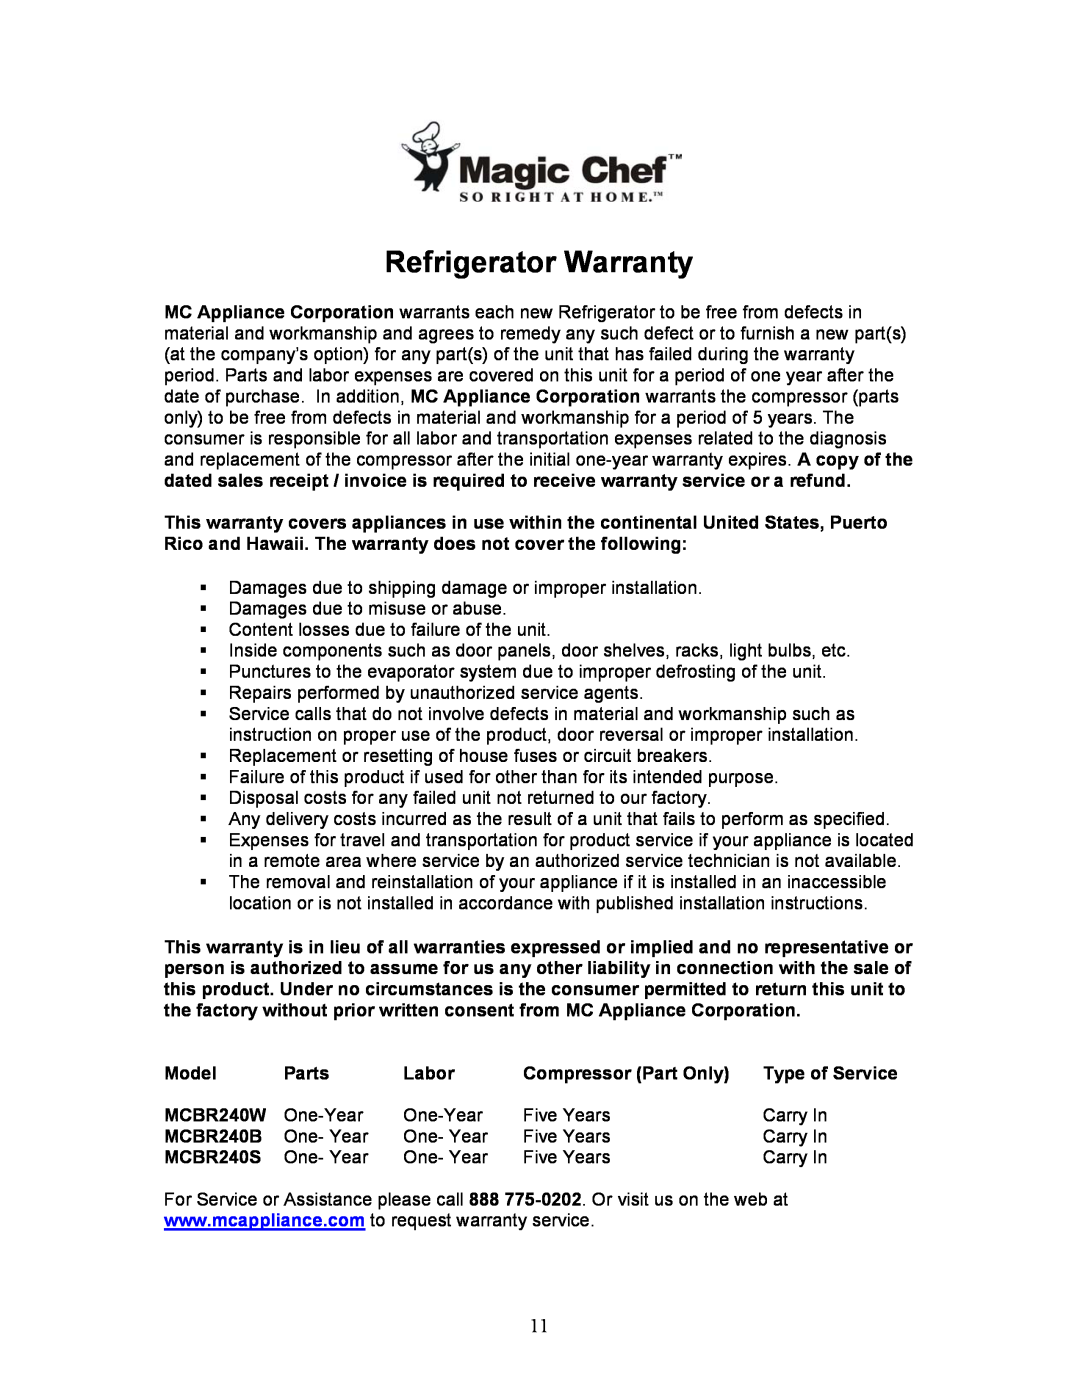 Magic Chef MCBR240B instruction manual Refrigerator Warranty, Model, Parts, Labor, Compressor Part Only, MCBR240W, MCBR240S 